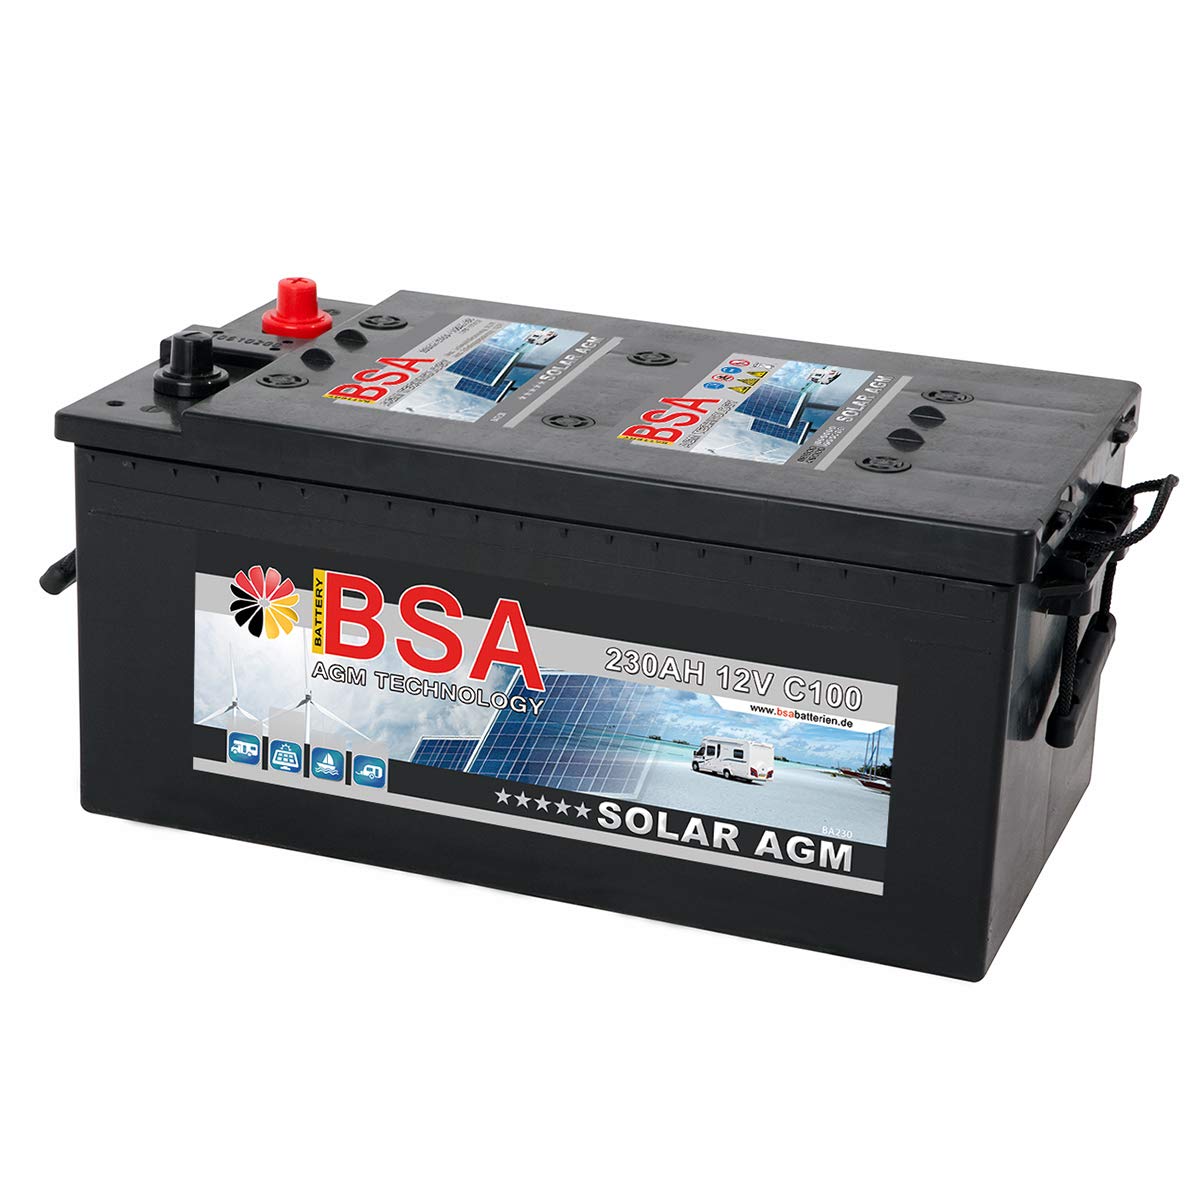 BSA Solarbatterie 12V 230Ah Solar Akku Wohnmobil Boot Schiff Versorgung AGM Gel Batterie